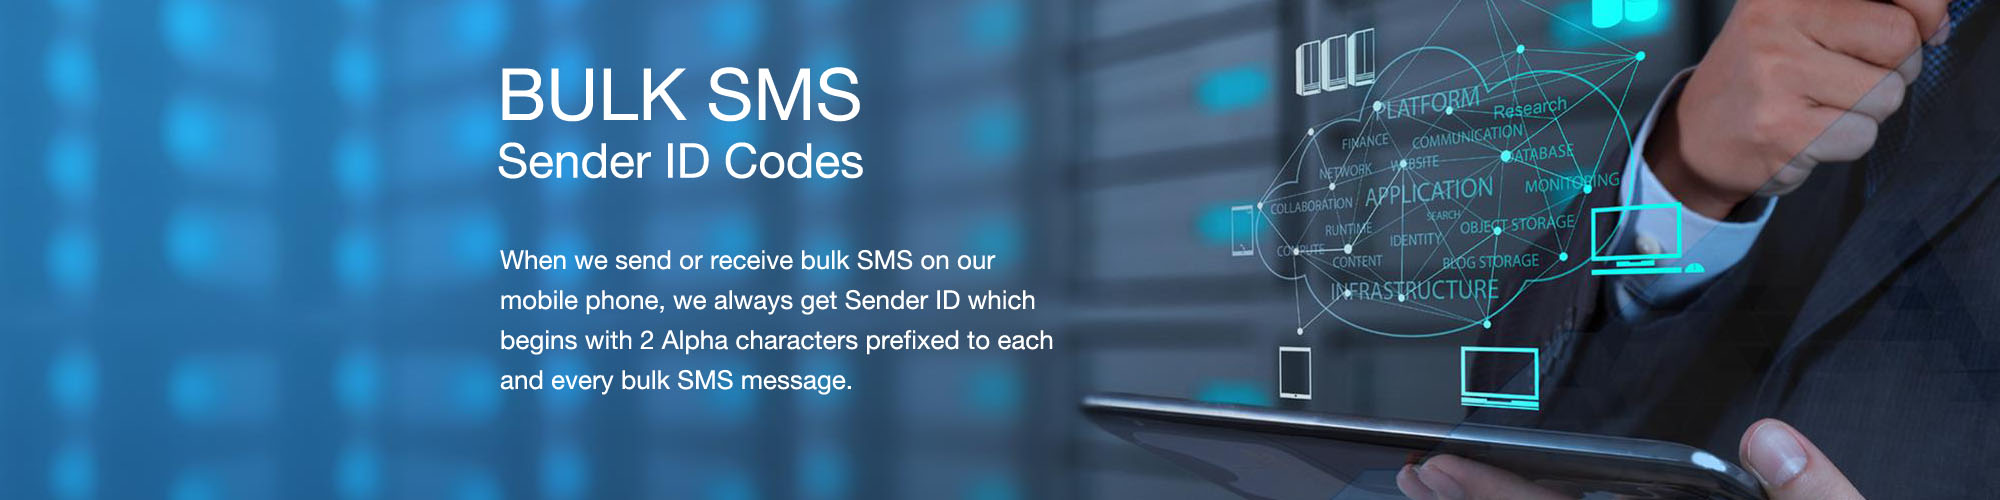 Bulk SMS Sender ID Codes